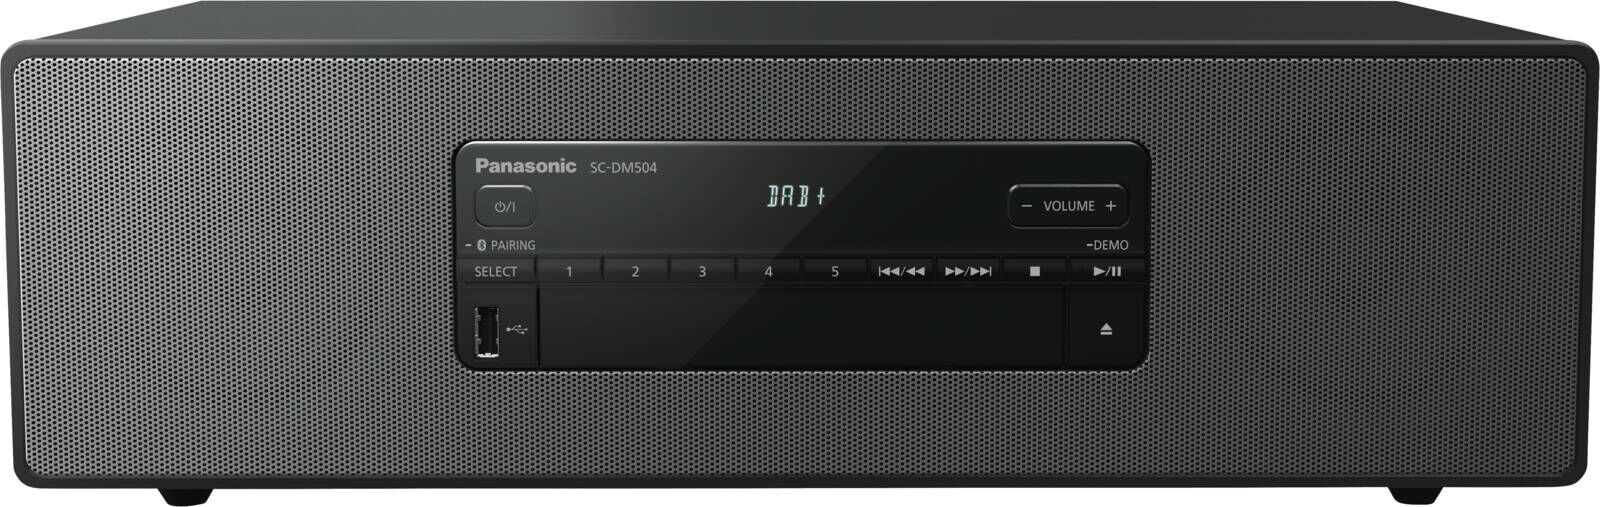 Panasonic SC-DM504 Schwarz - CD-Player Audiosystem All-in-One mit